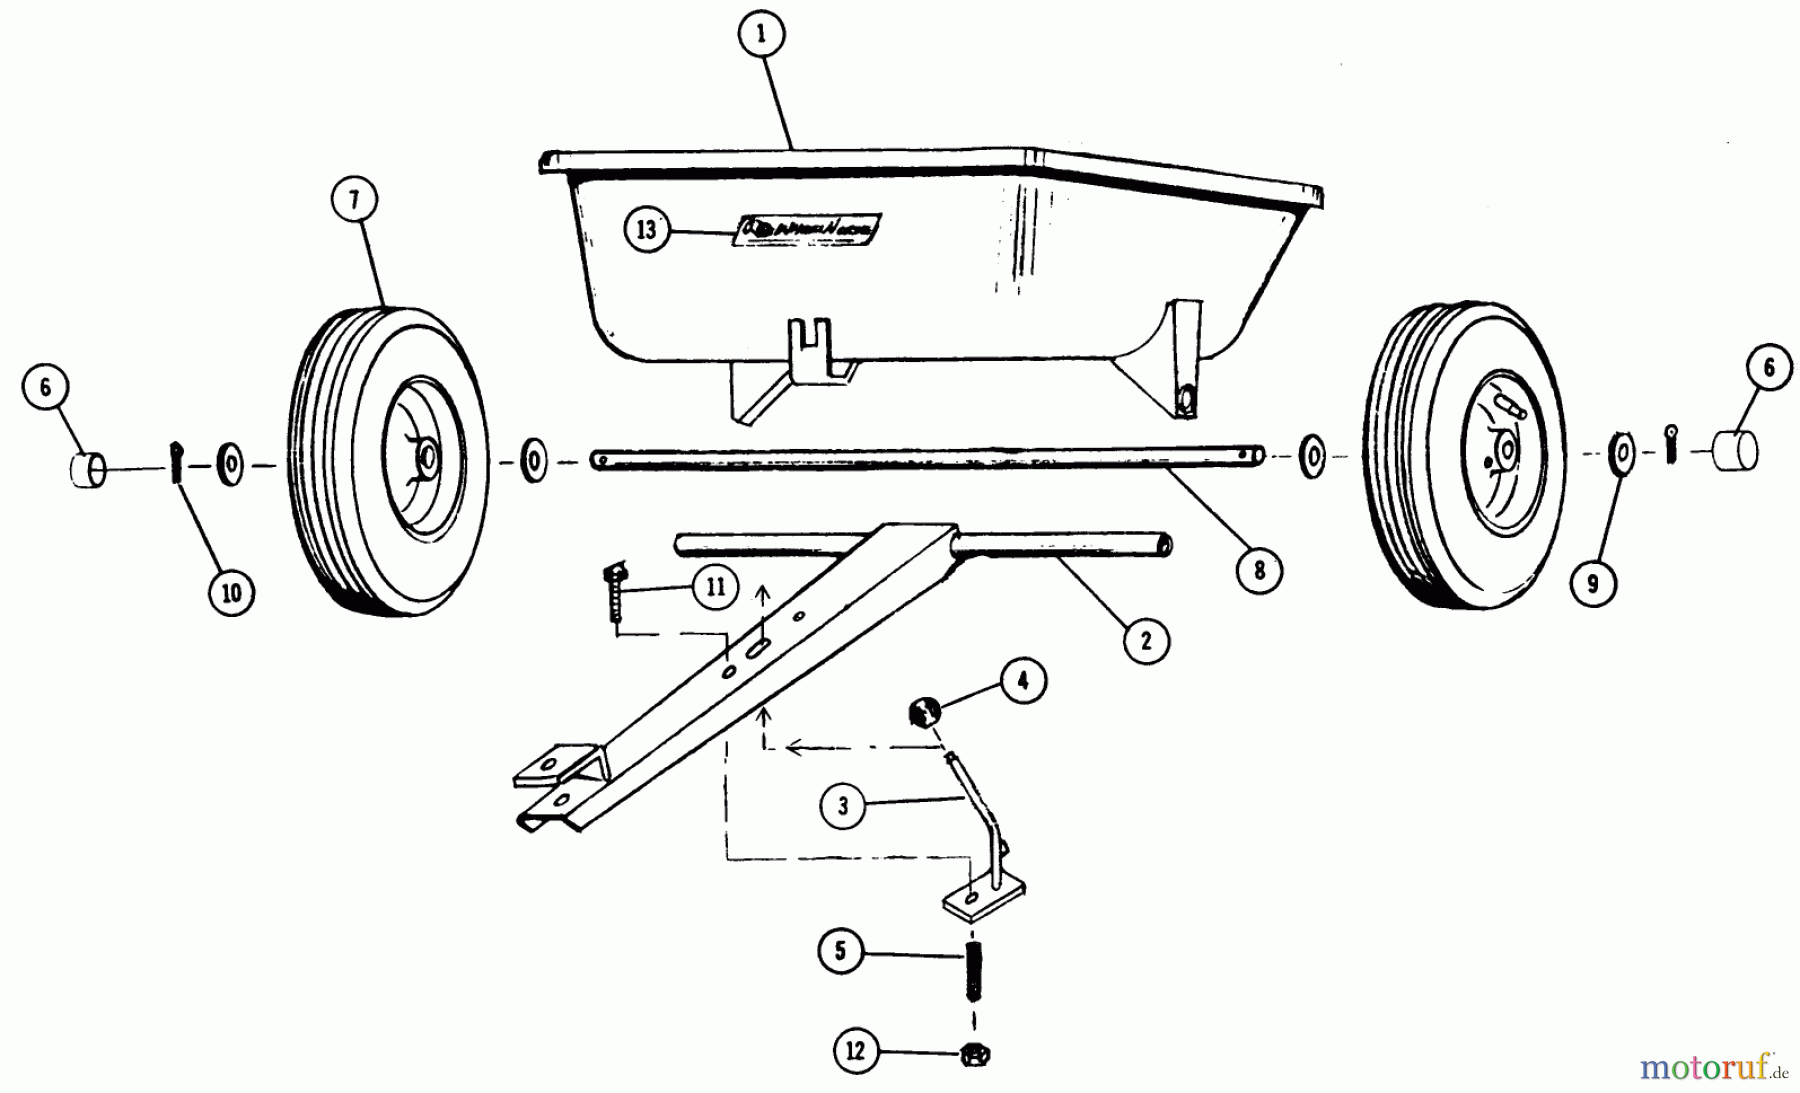  Toro Neu Utility Carts 7-2211 - Toro 2-Wheel Cart, 1972 PARTS LIST-DUMP TRAILER MODEL 7-2211 (FORMERLY LTD-244)